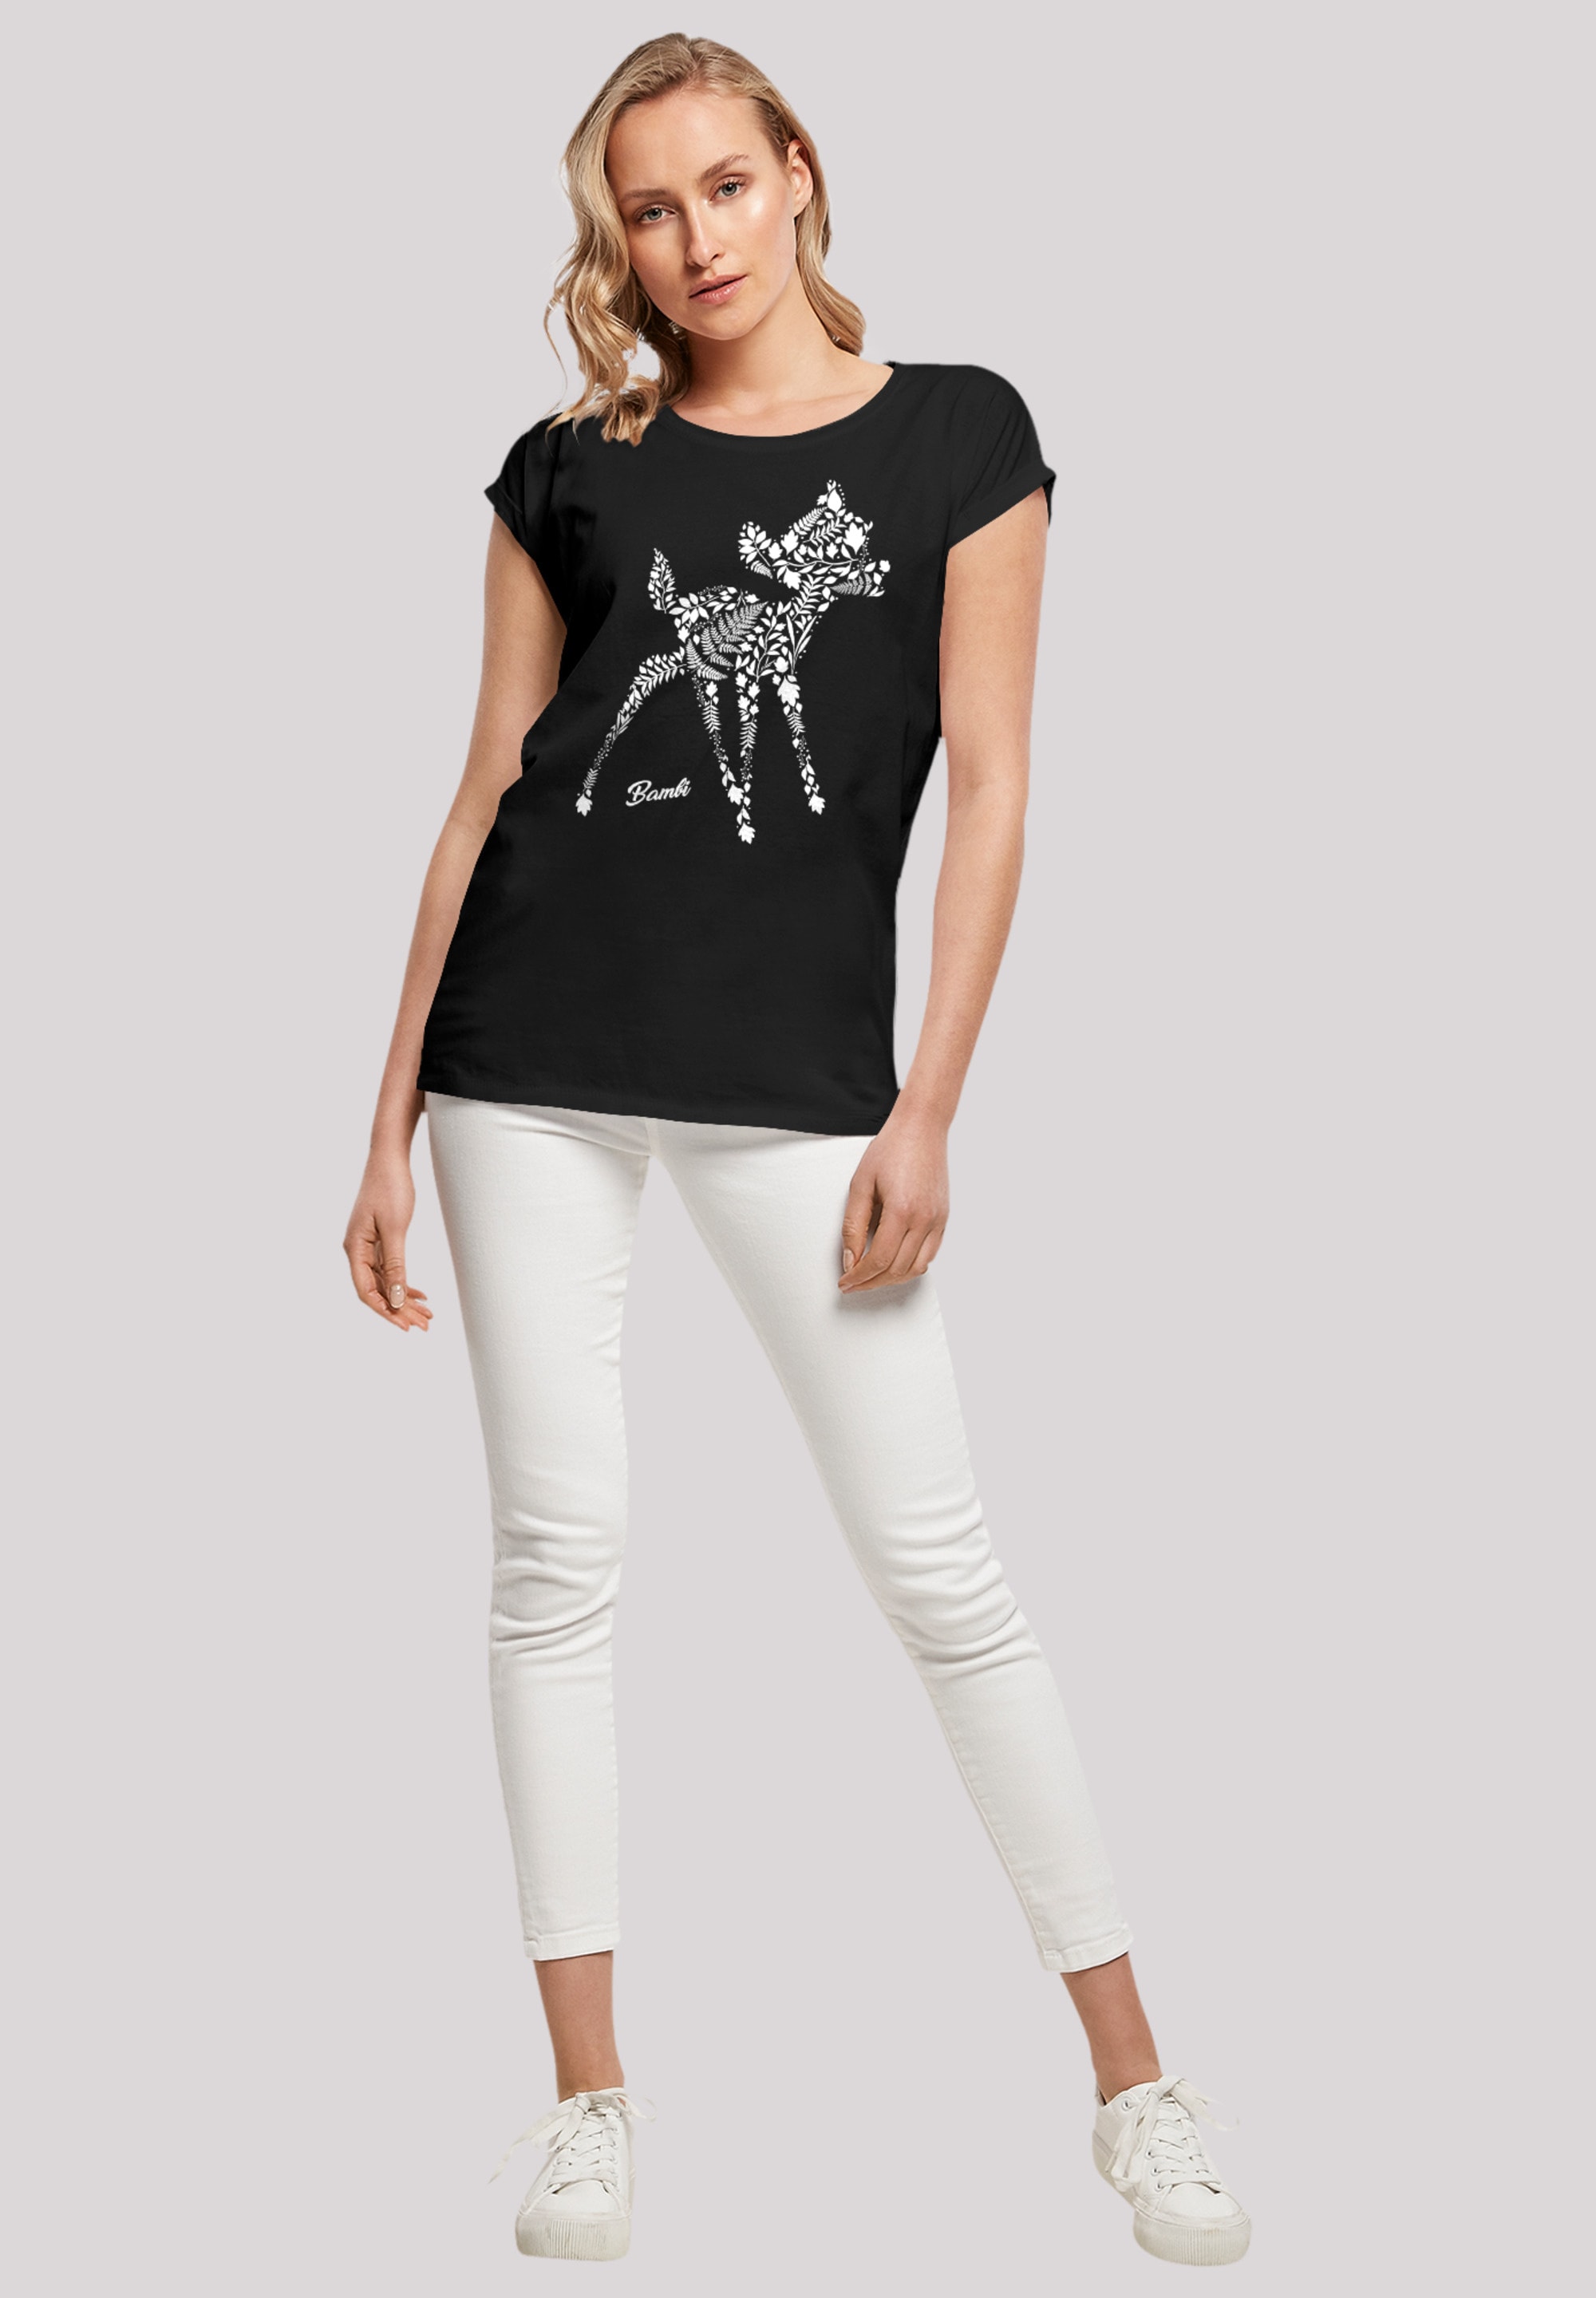 online Premium Qualität T-Shirt F4NT4STIC Botanica«, Bambi kaufen I\'m »Disney walking |